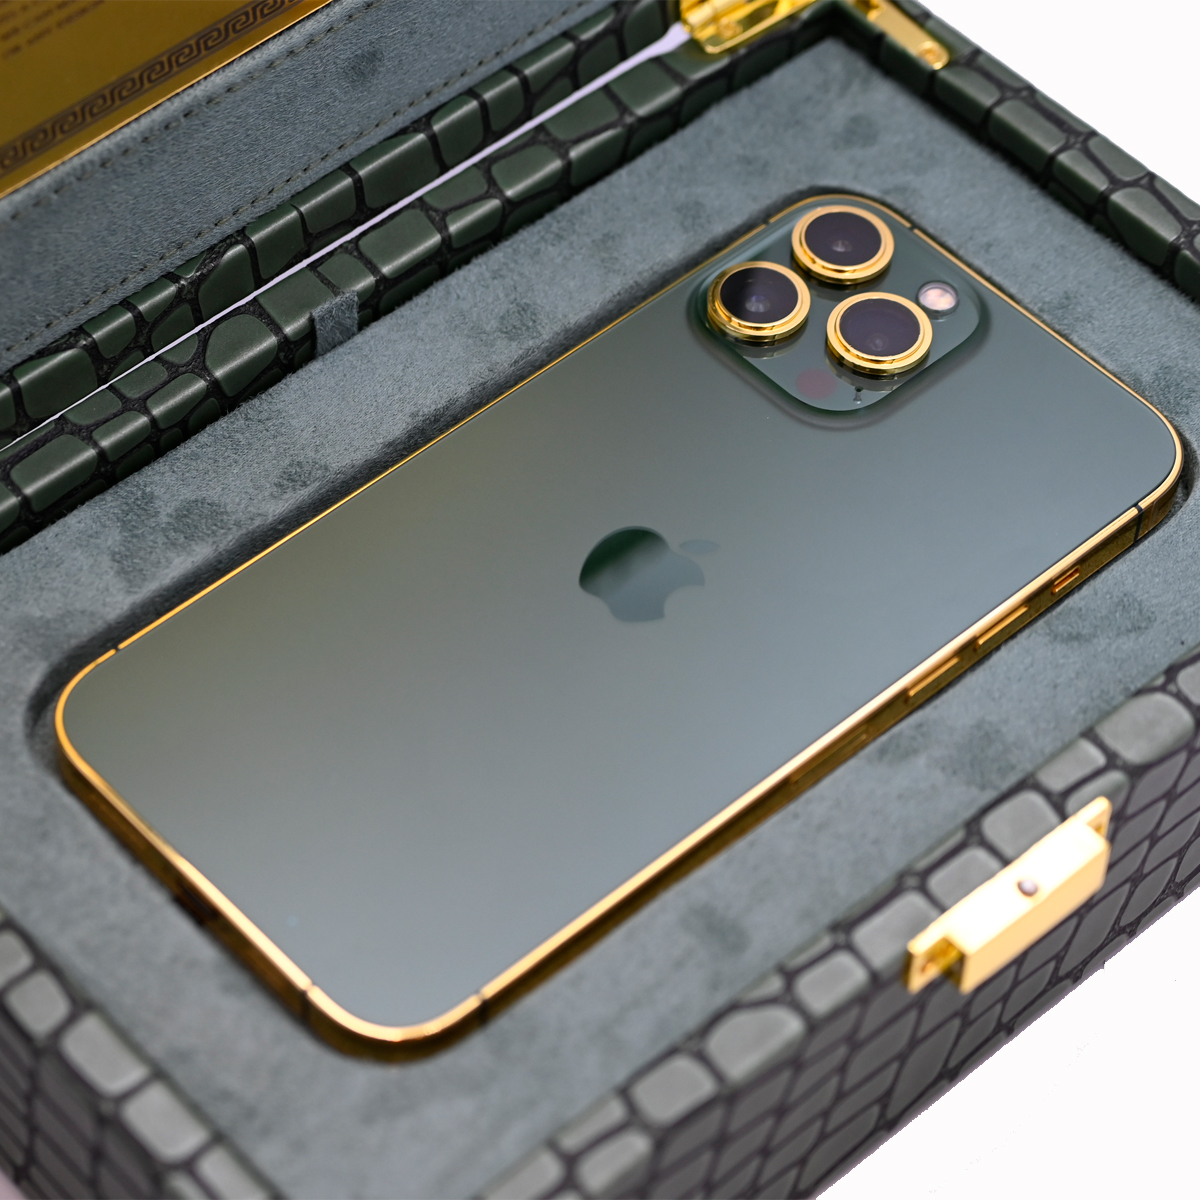 Caviar Luxury Customized 24k Gold Frame iPhone 13 Pro Max - Midnight Green 1TB